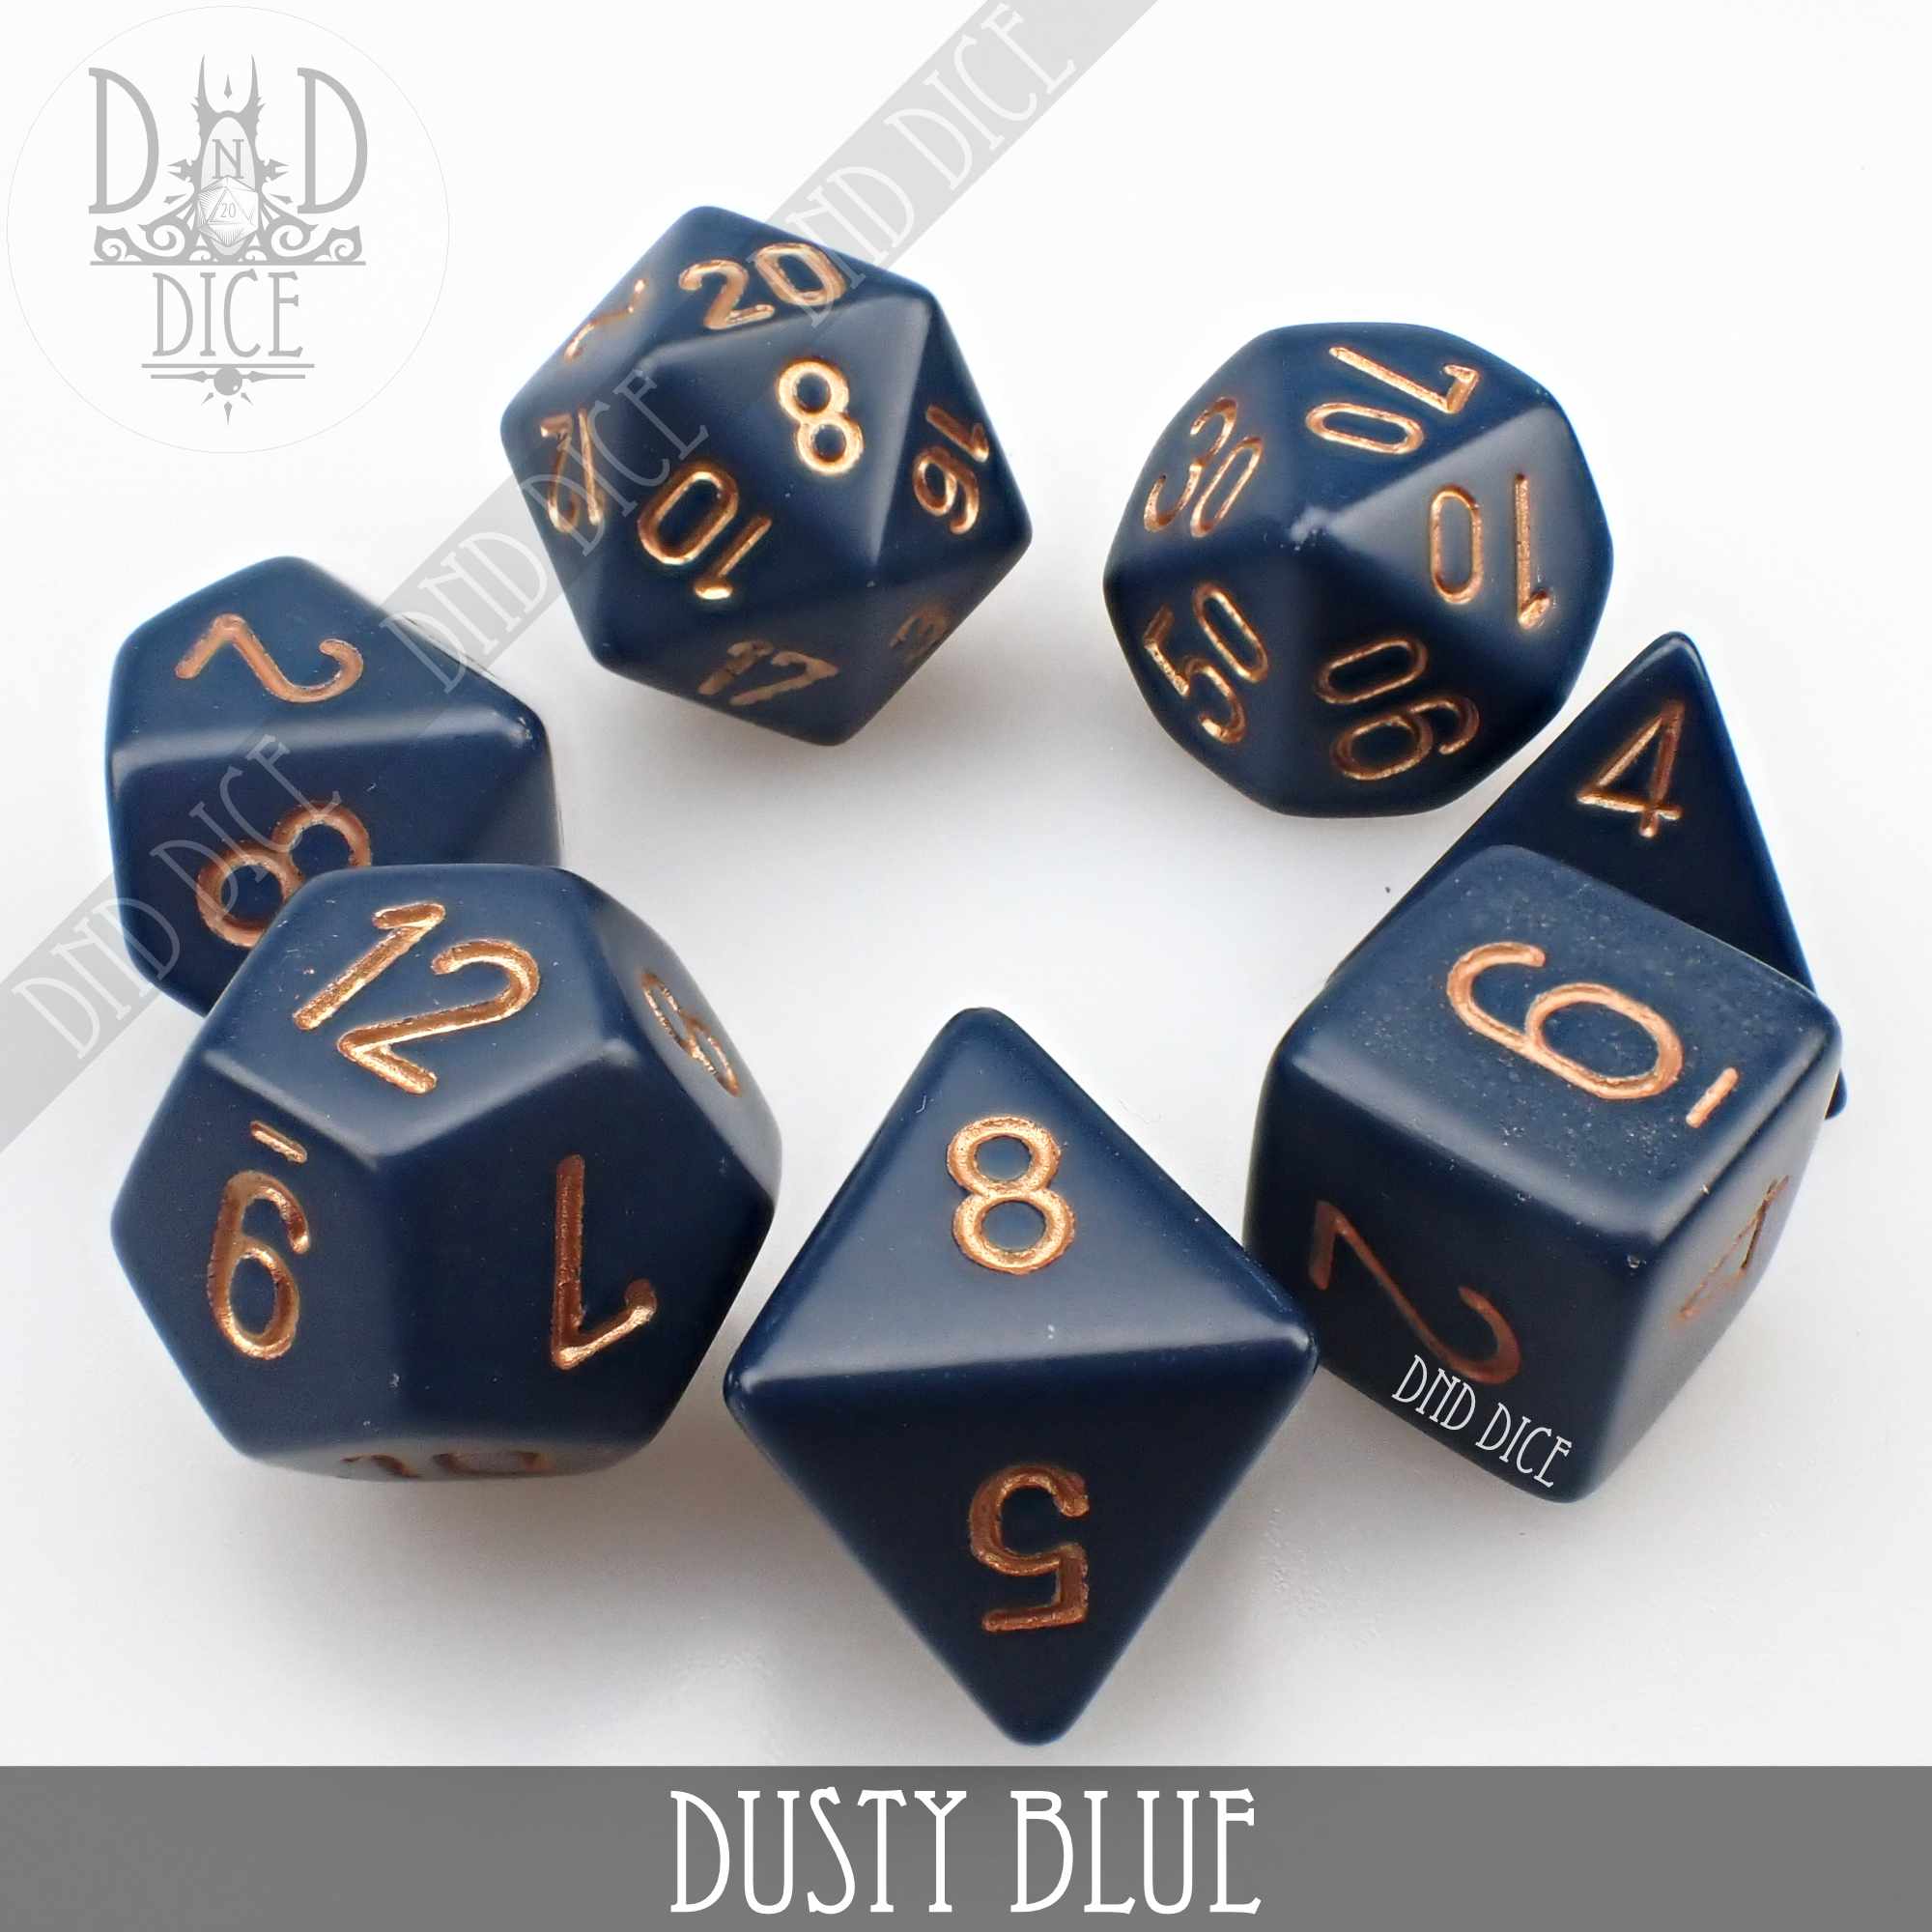 Dusty Blue Build Your Own Set